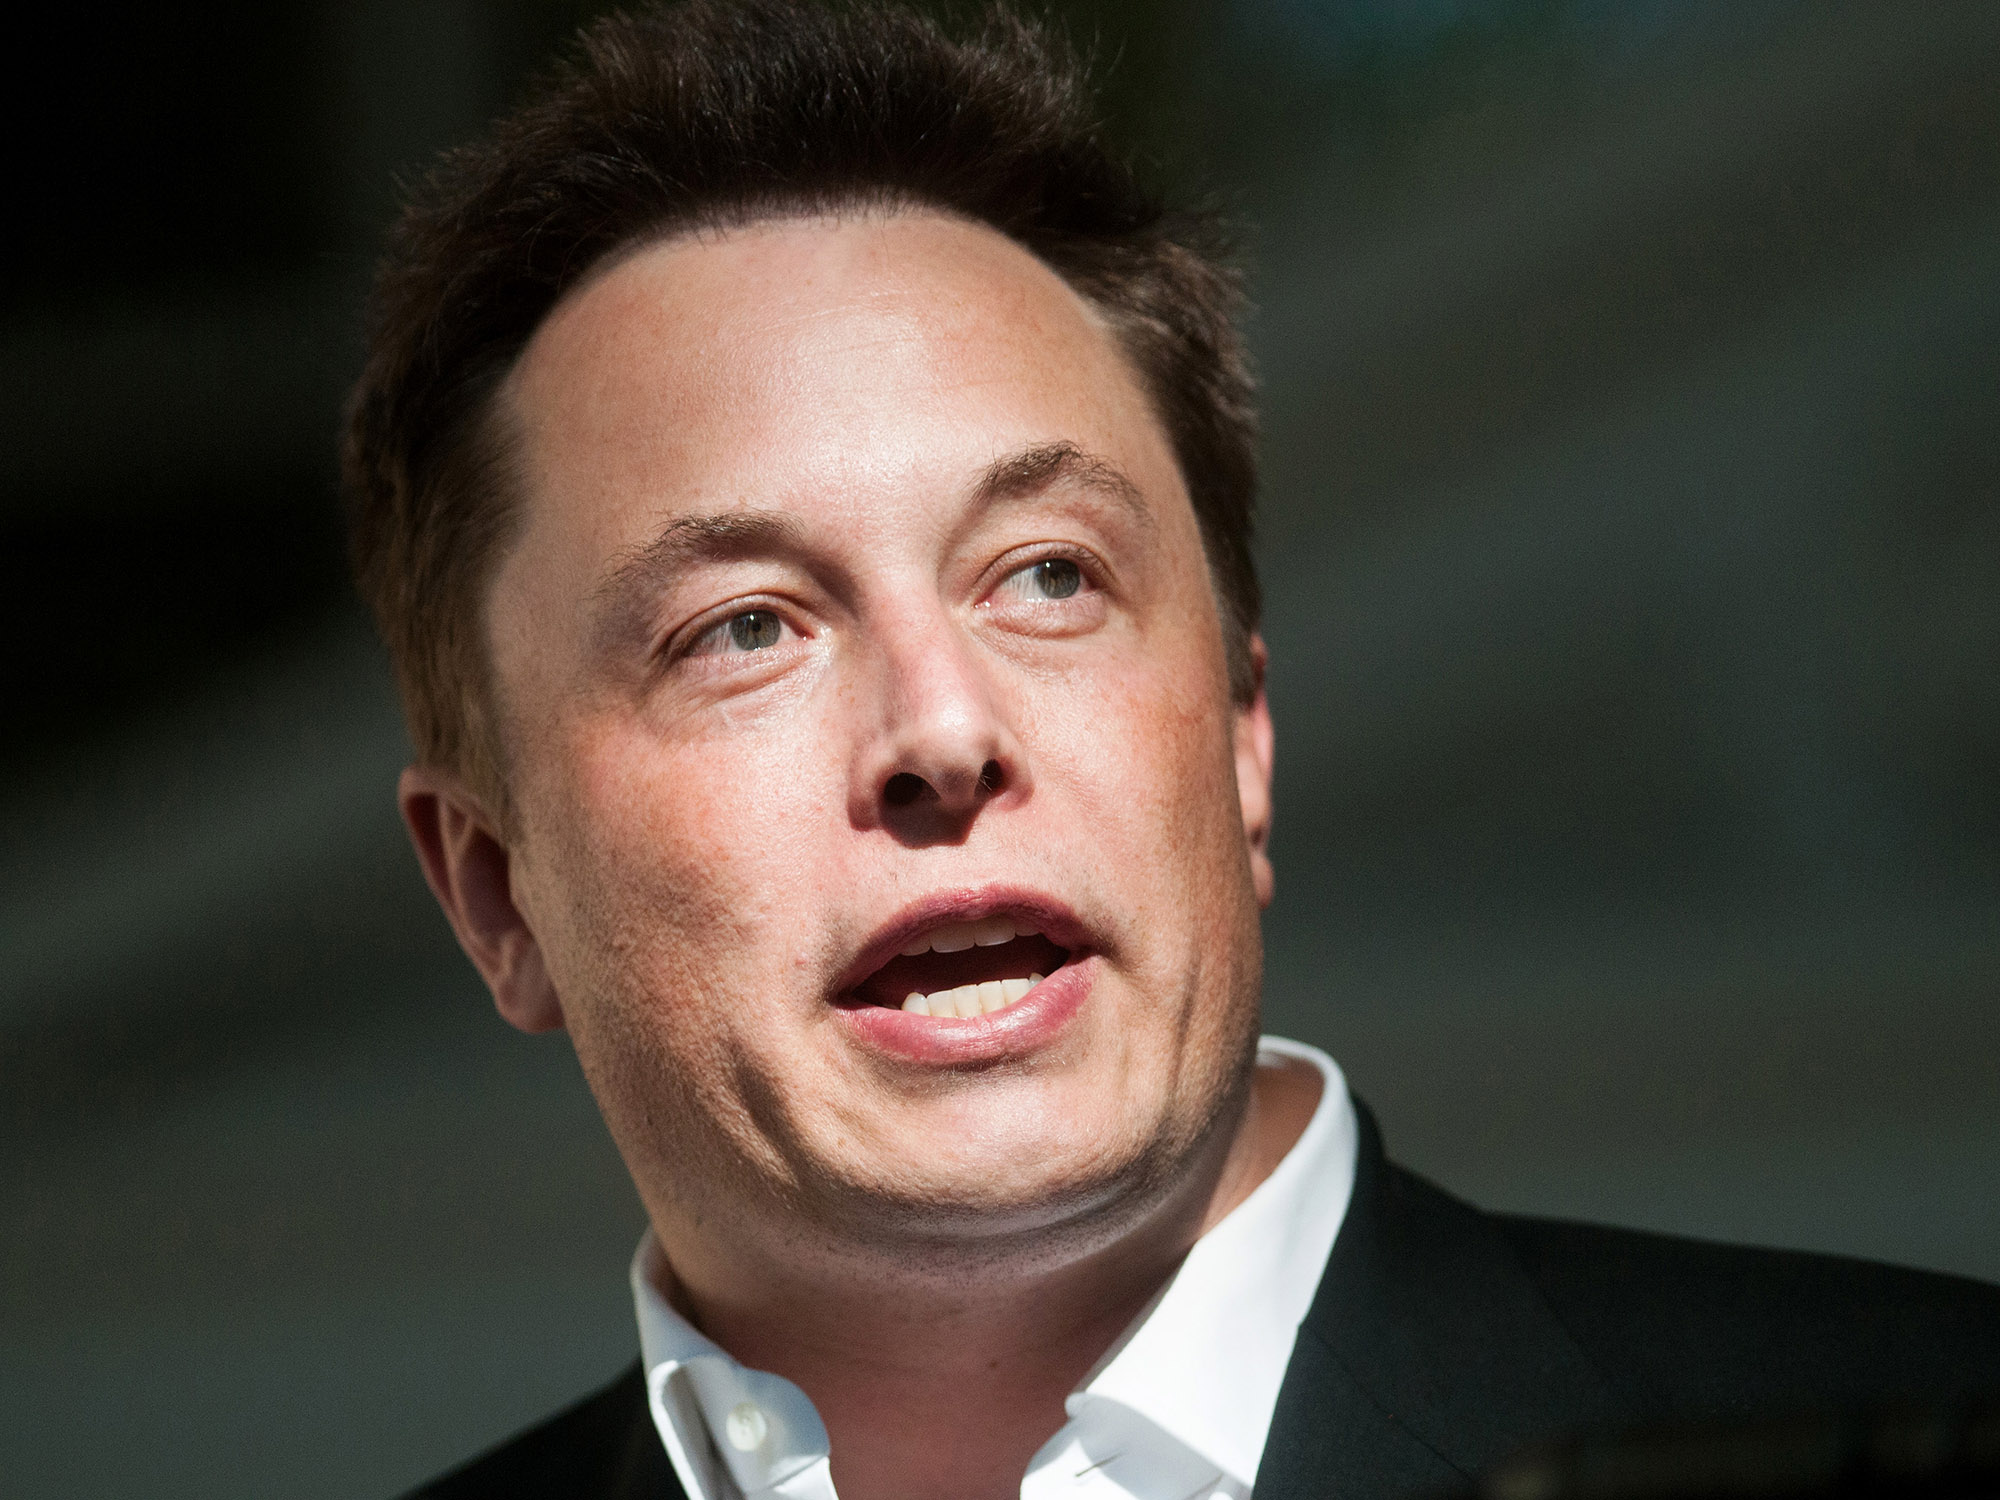 Tesla Motors CEO Elon Musk